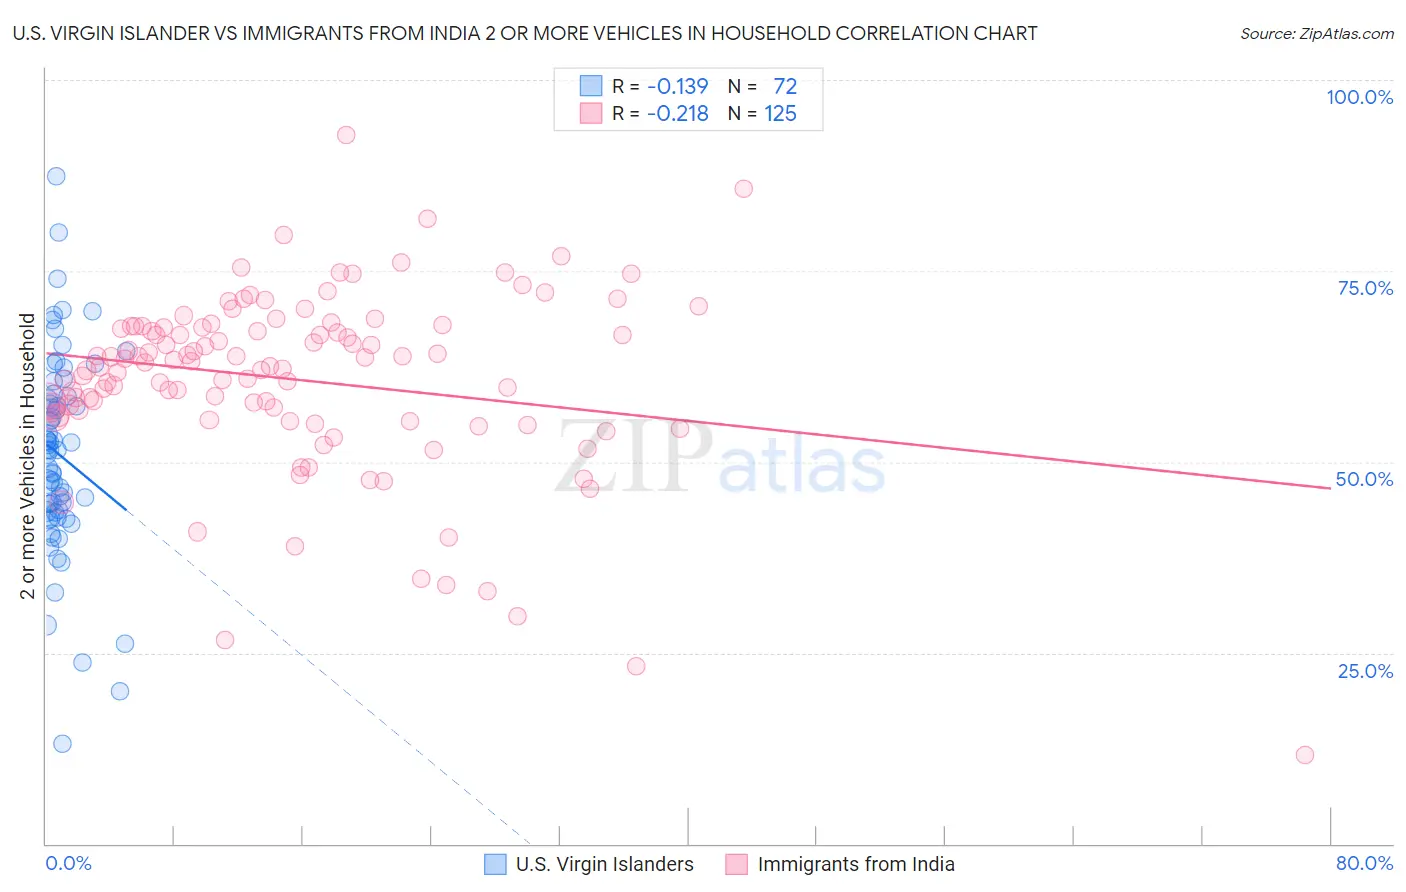 U.S. Virgin Islander vs Immigrants from India 2 or more Vehicles in Household